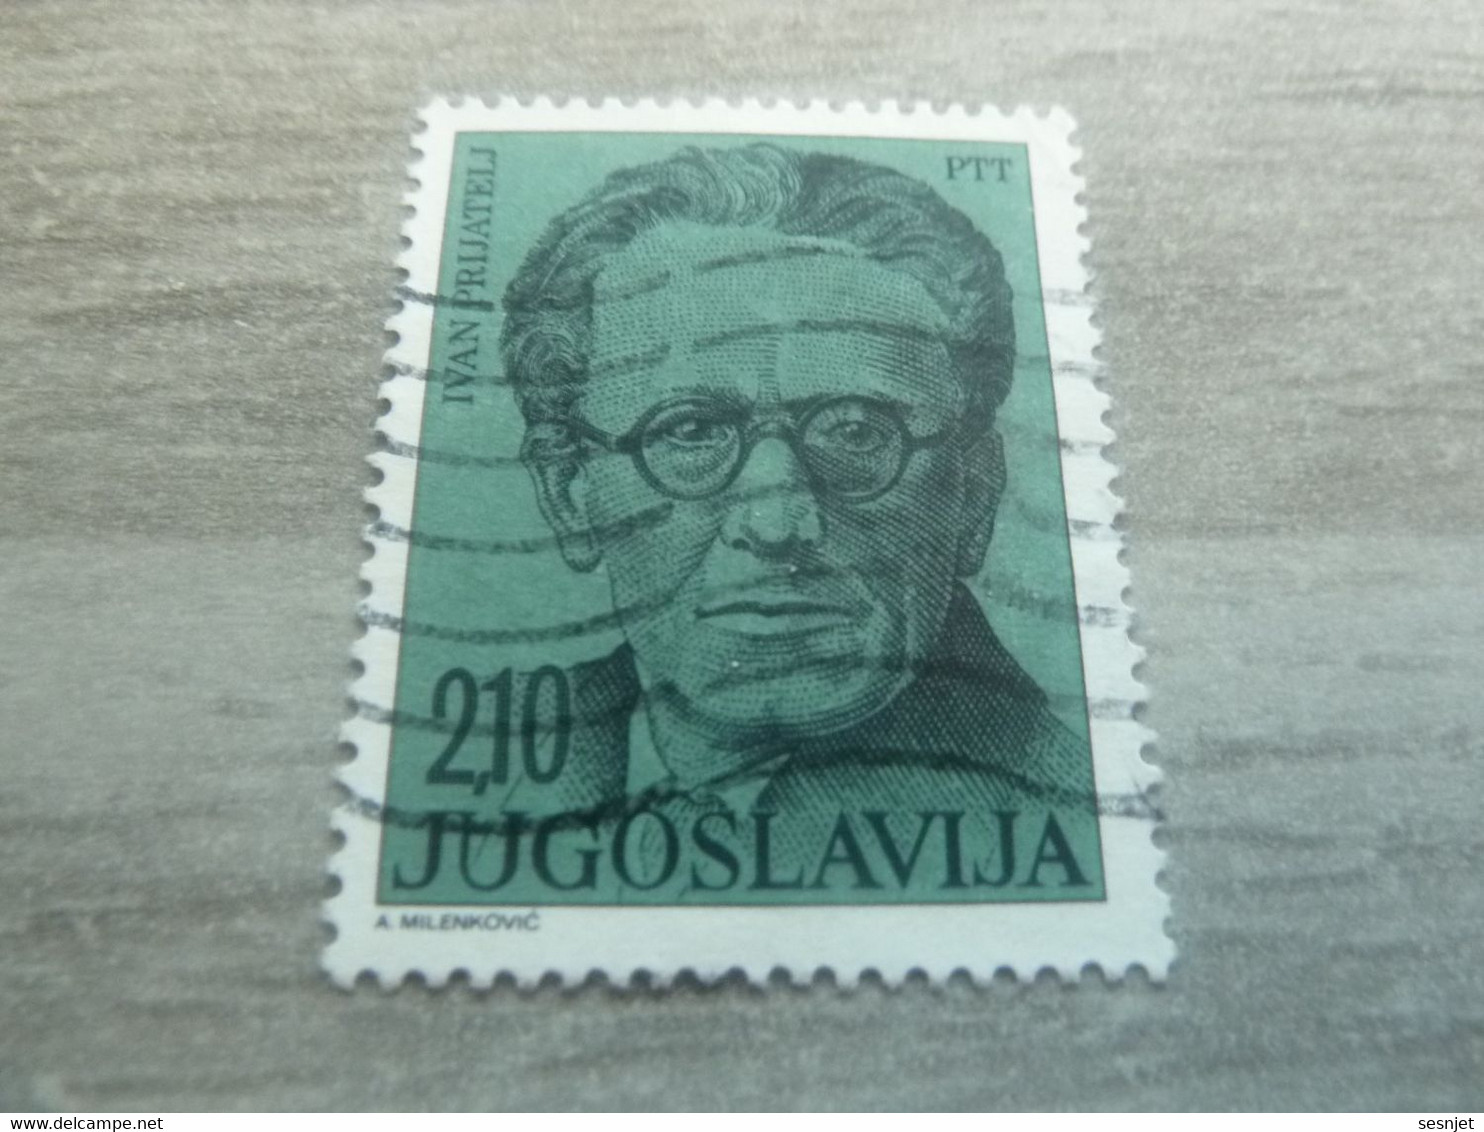 Ptt - Jugoslavija - Ivan Prijatelj - Val 2.10 - Bleu-vert - Oblitéré - - Used Stamps